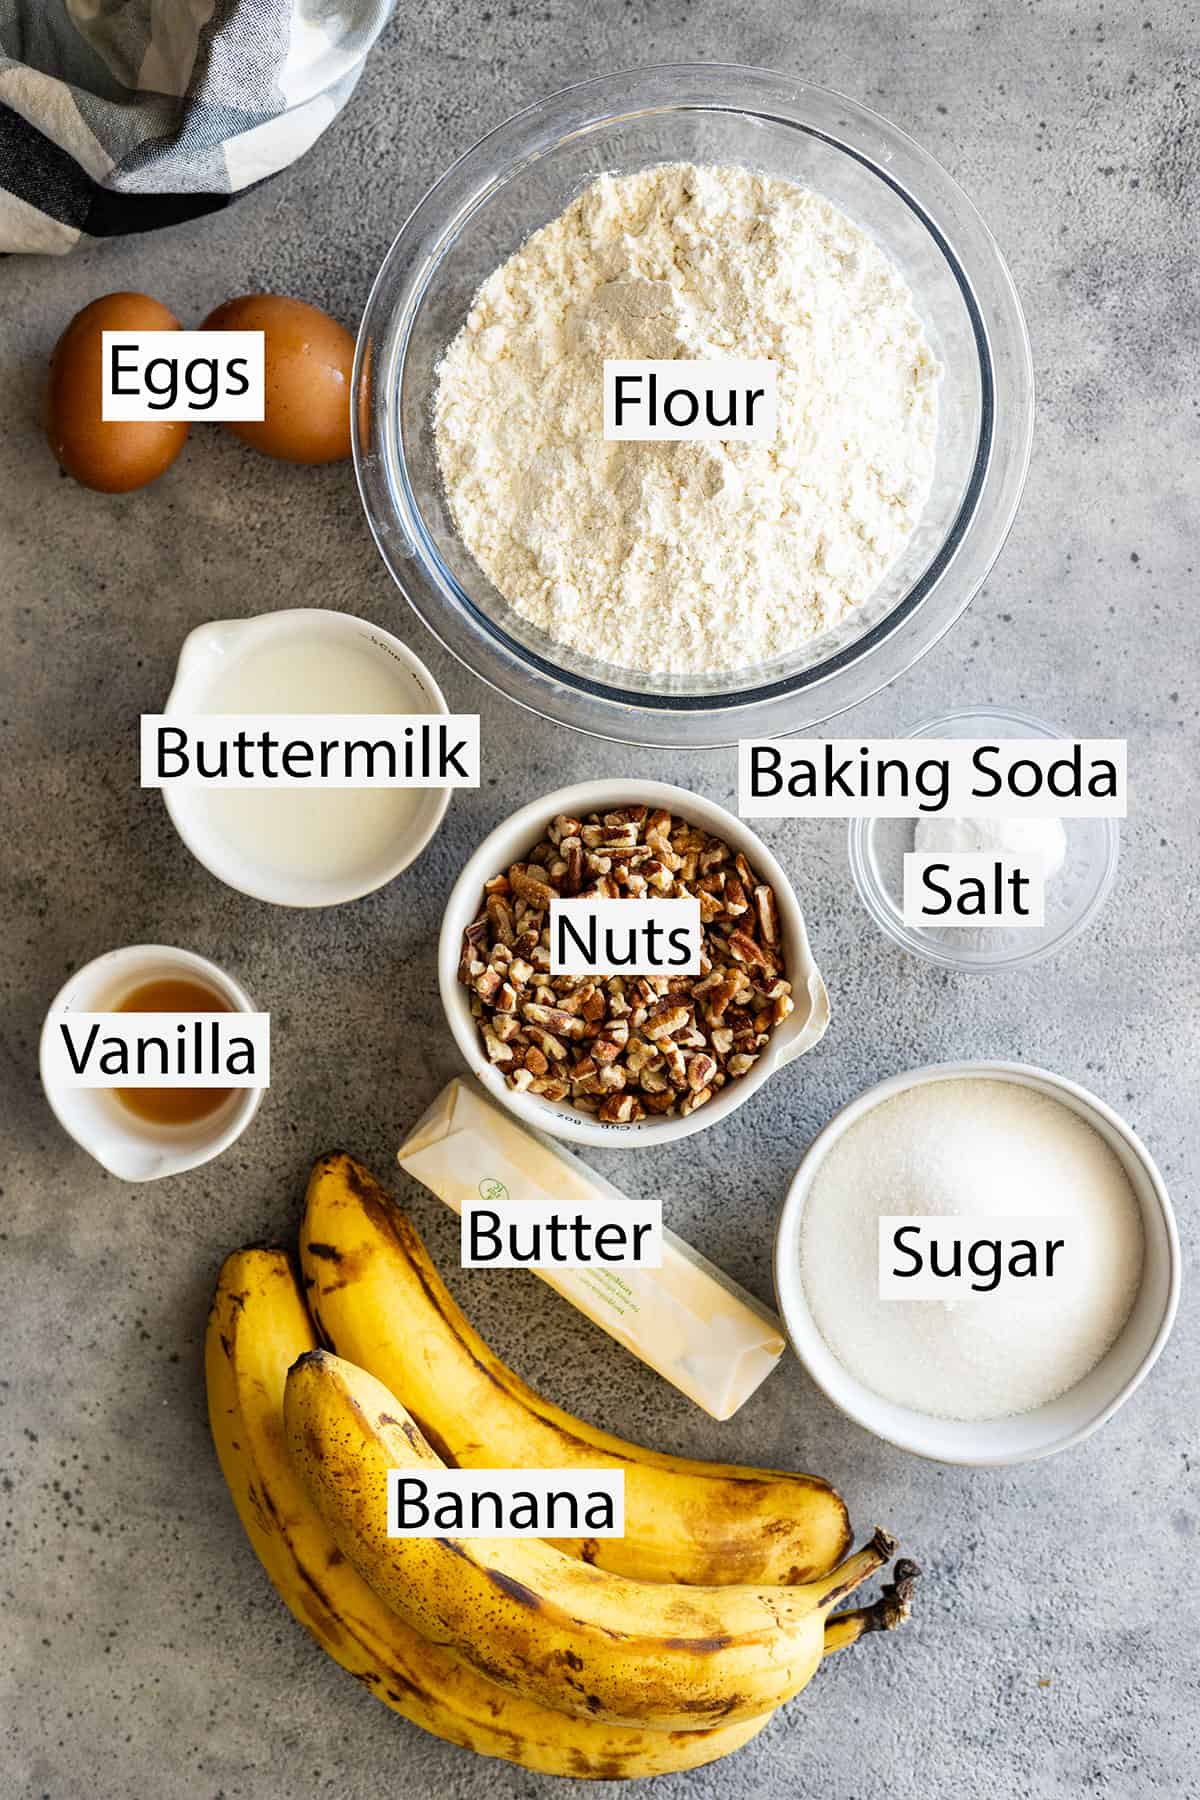 Ingredients: flour, eggs, buttermilk, baking soda, salt, nuts, vanilla, butter, sugar, and bananas.